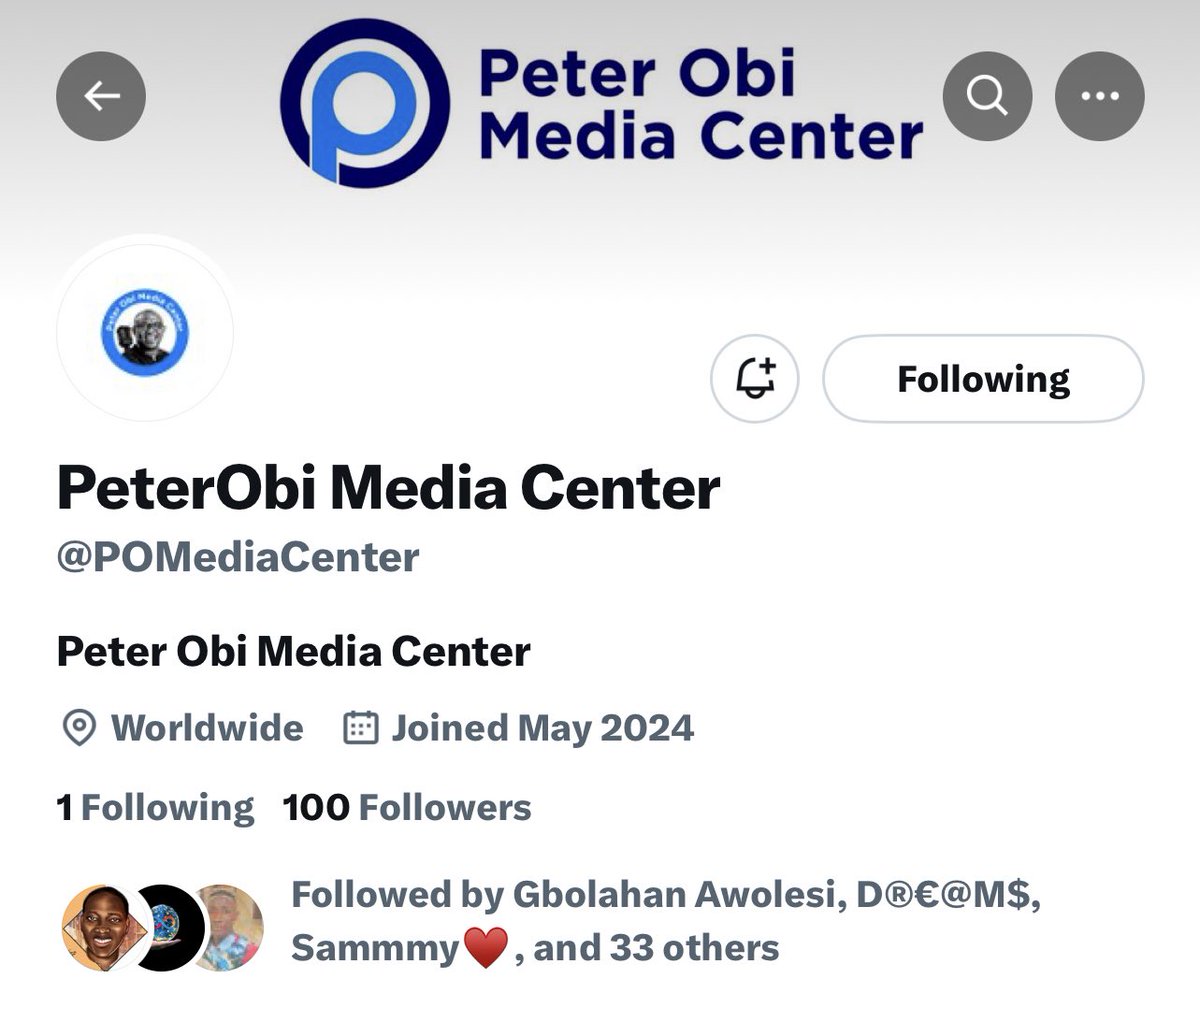 This is PO' media handle 

Oya on a followership level 

@POMediaCenter